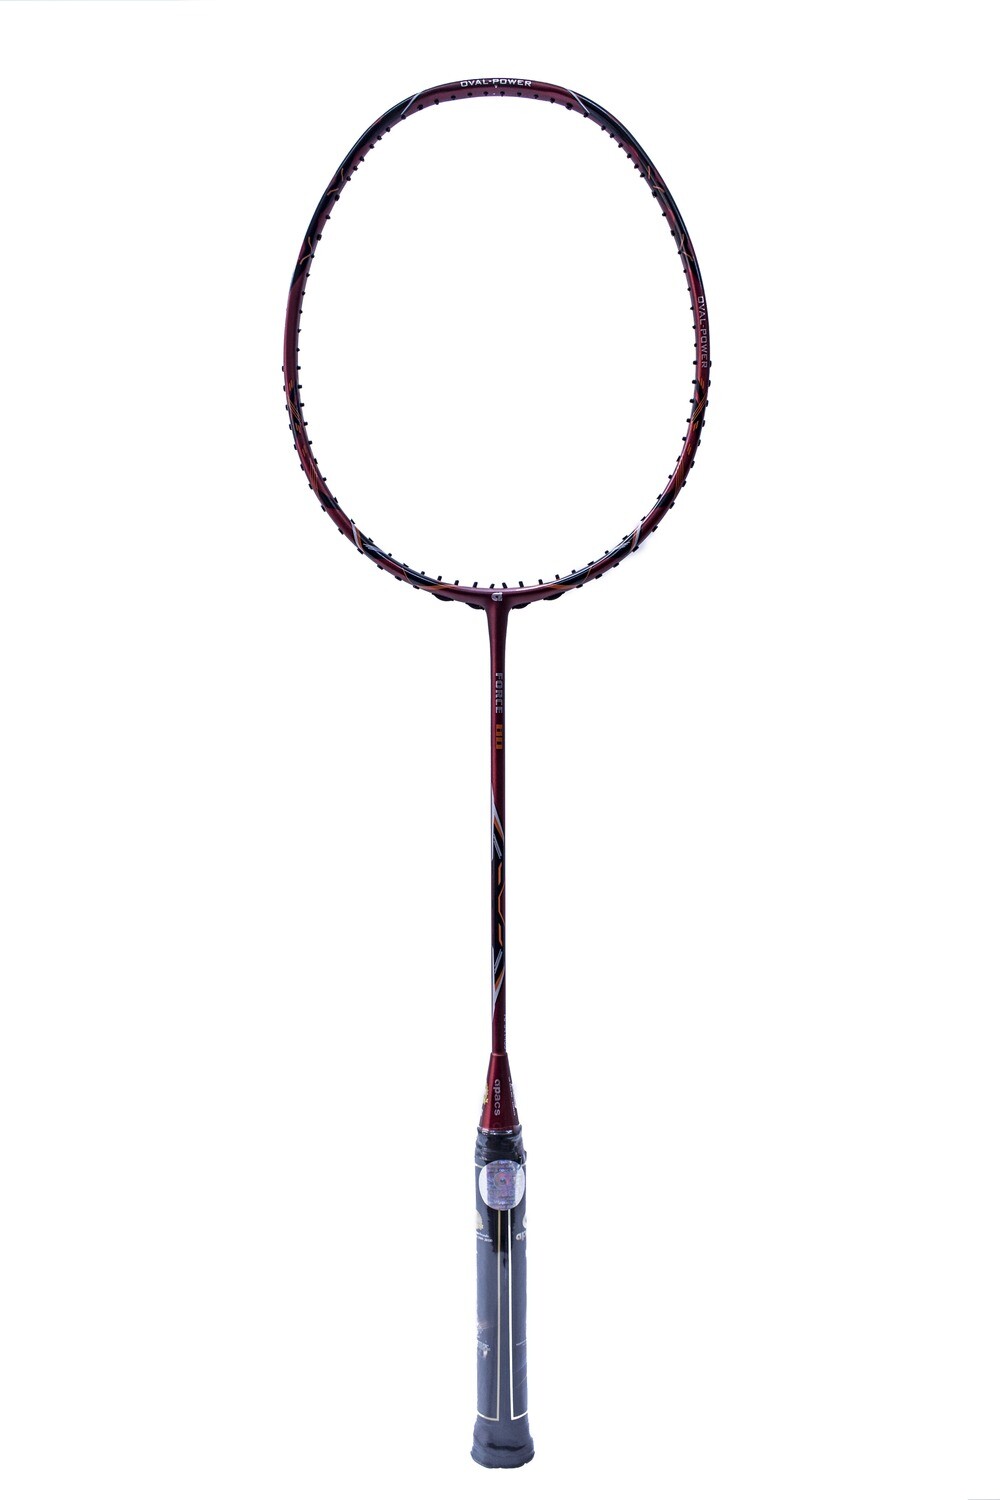 Apacs Force 80 Red Badminton Racquet